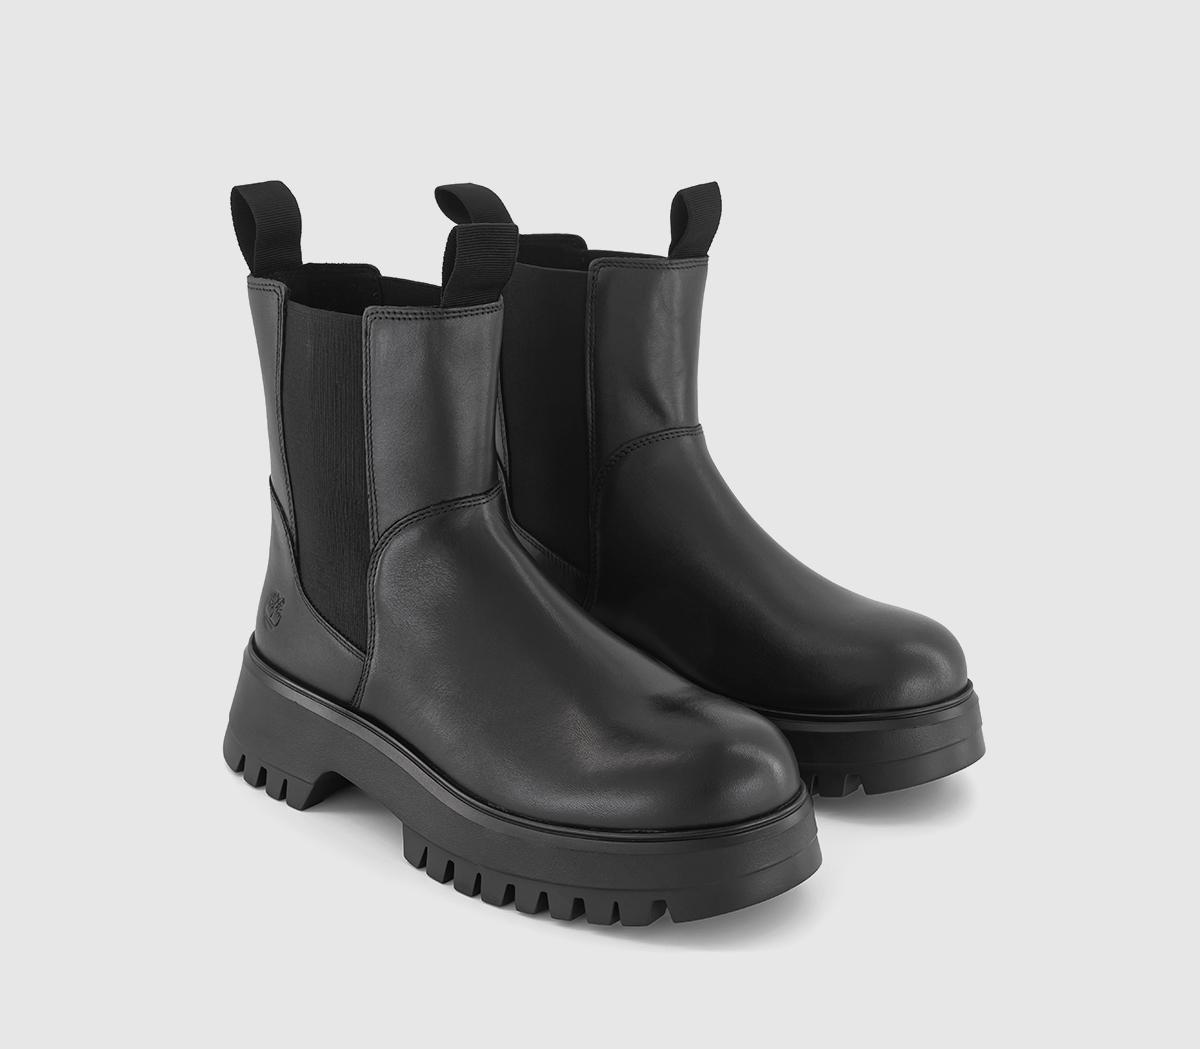 Timberland Tn Chelsea Boots Black, 3.5